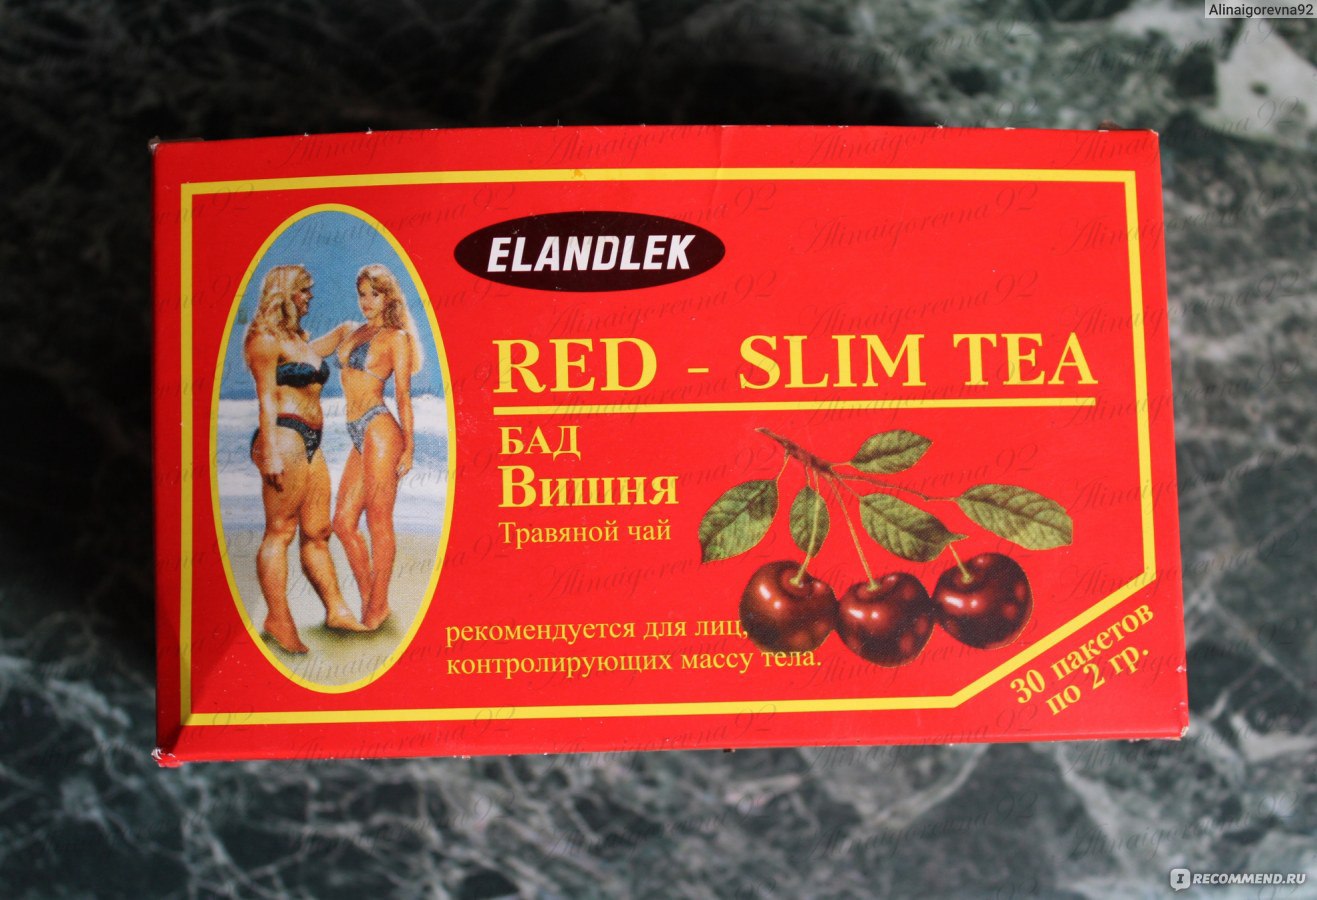 RED-SLIM TEA.